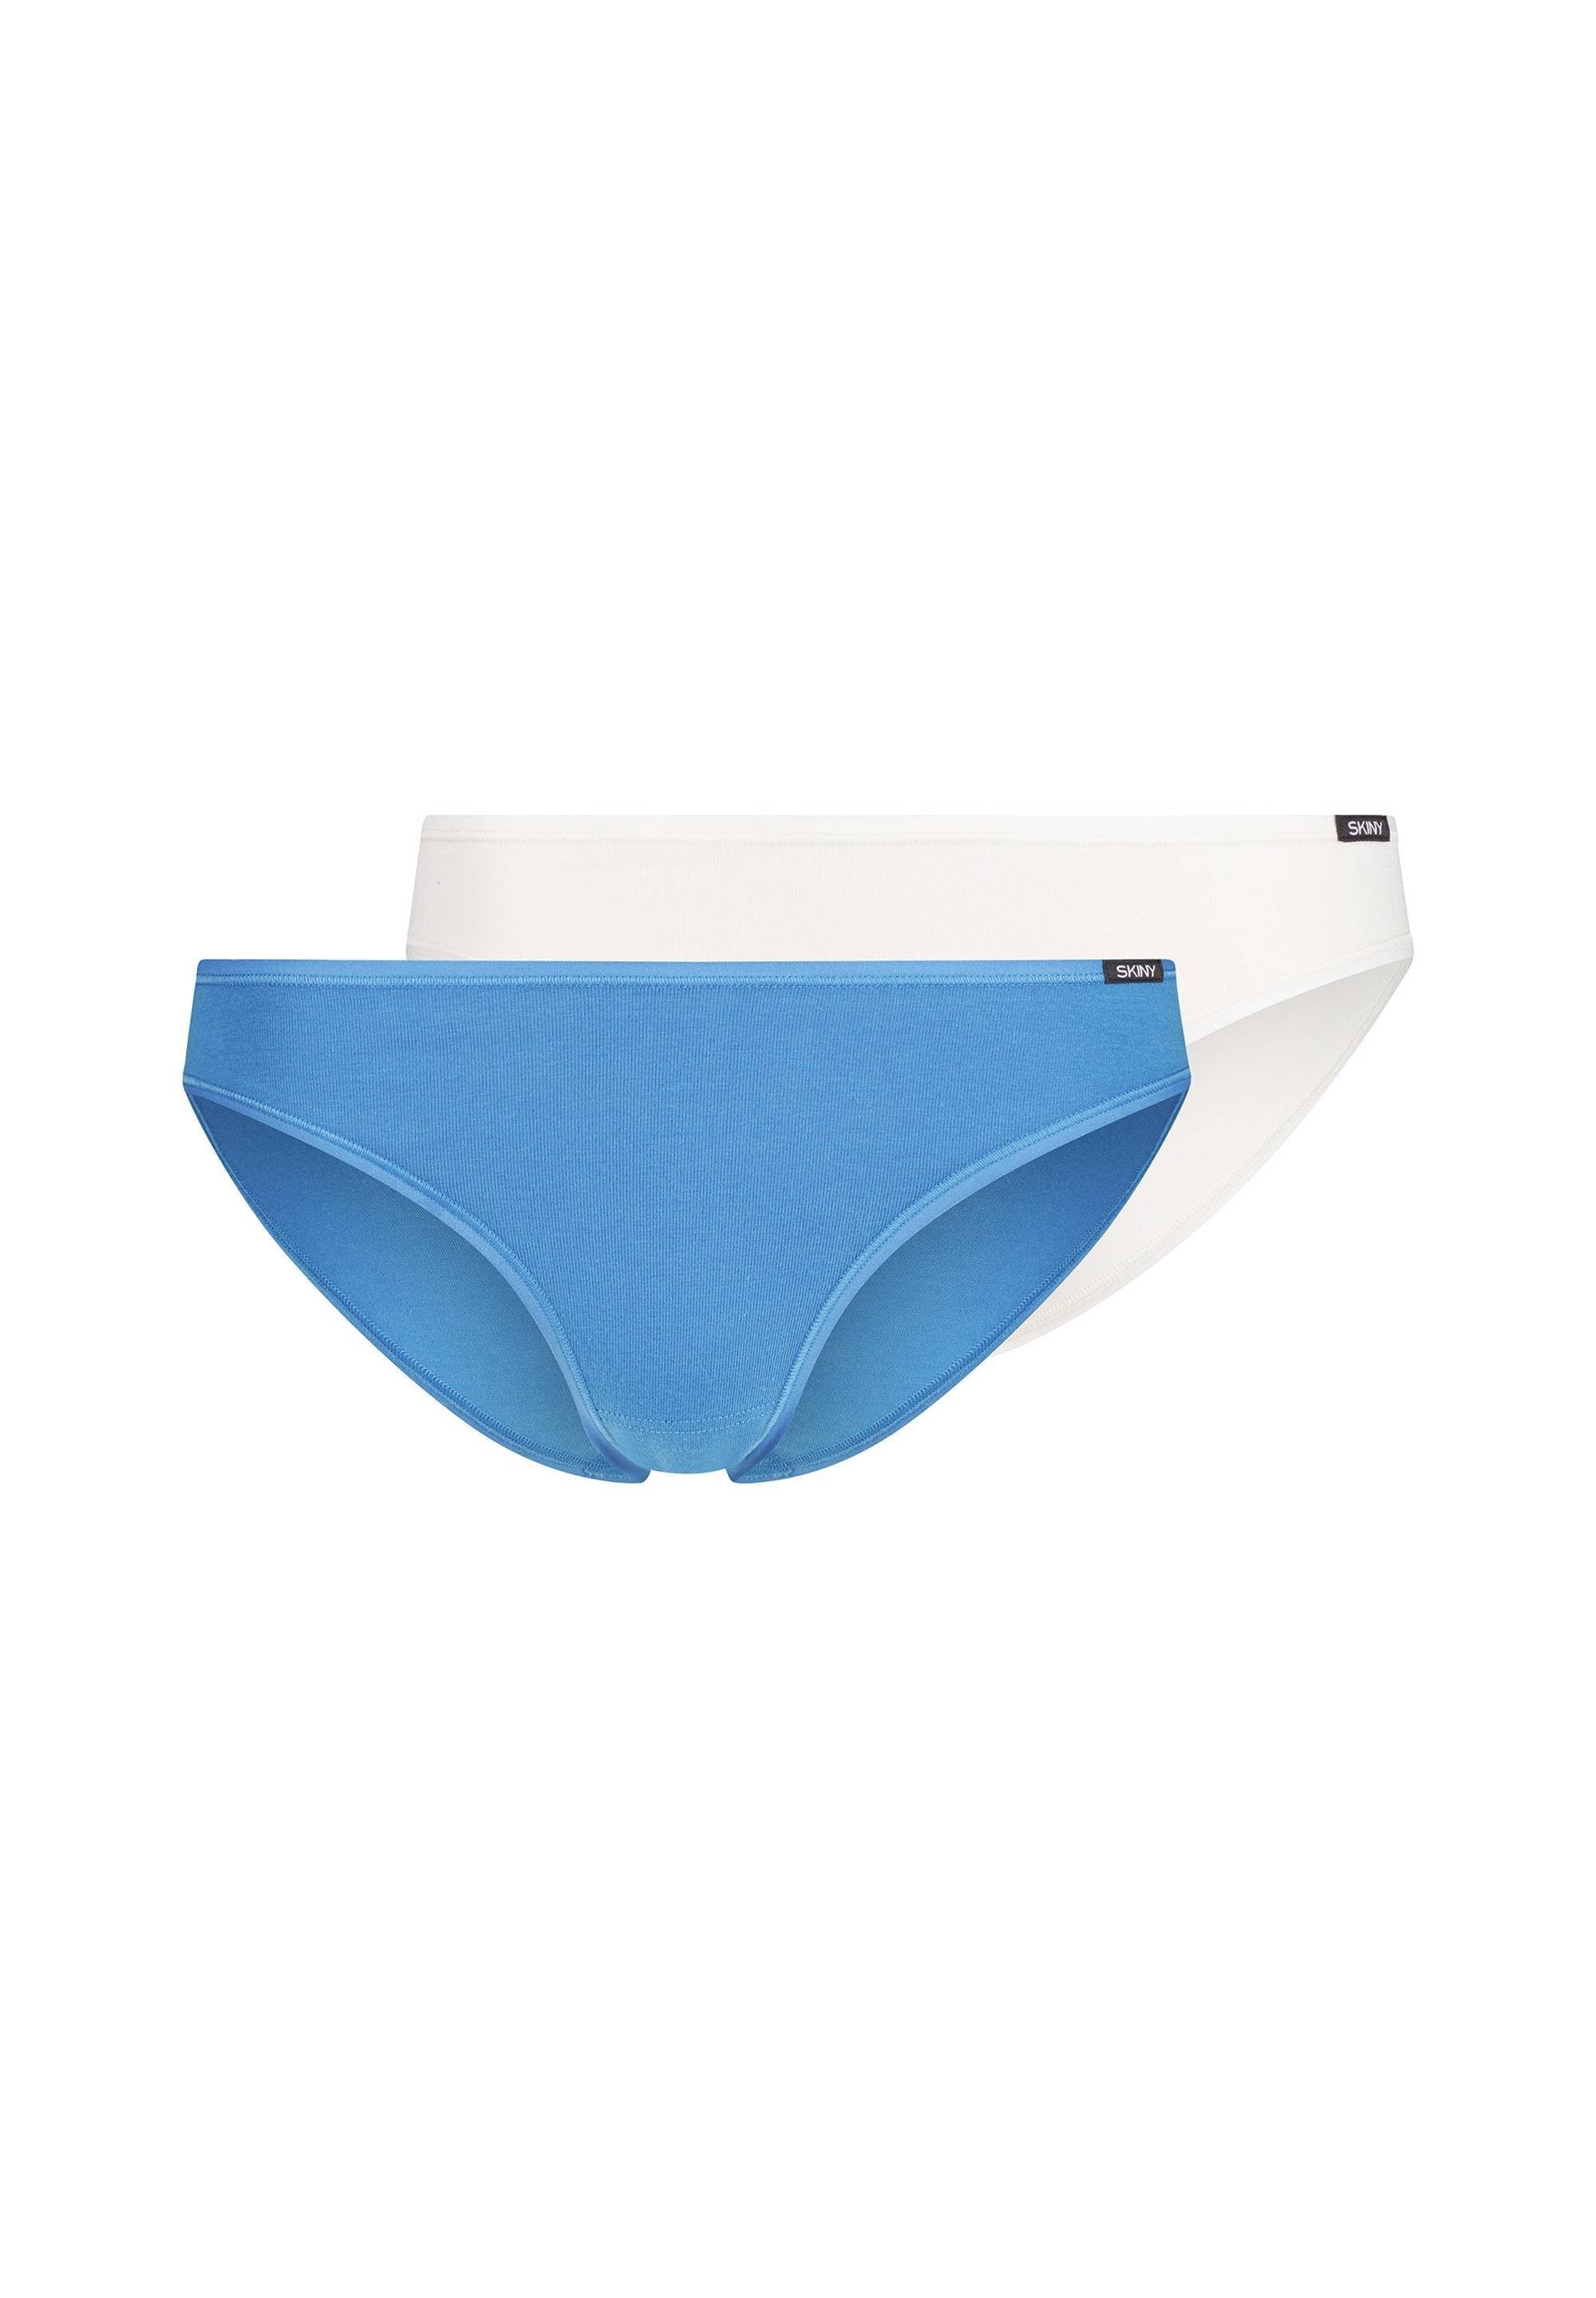 Cotton Rio Bikini Slip, Skiny 2er Slip Pack Hellblau/Weiß Slip, Damen -